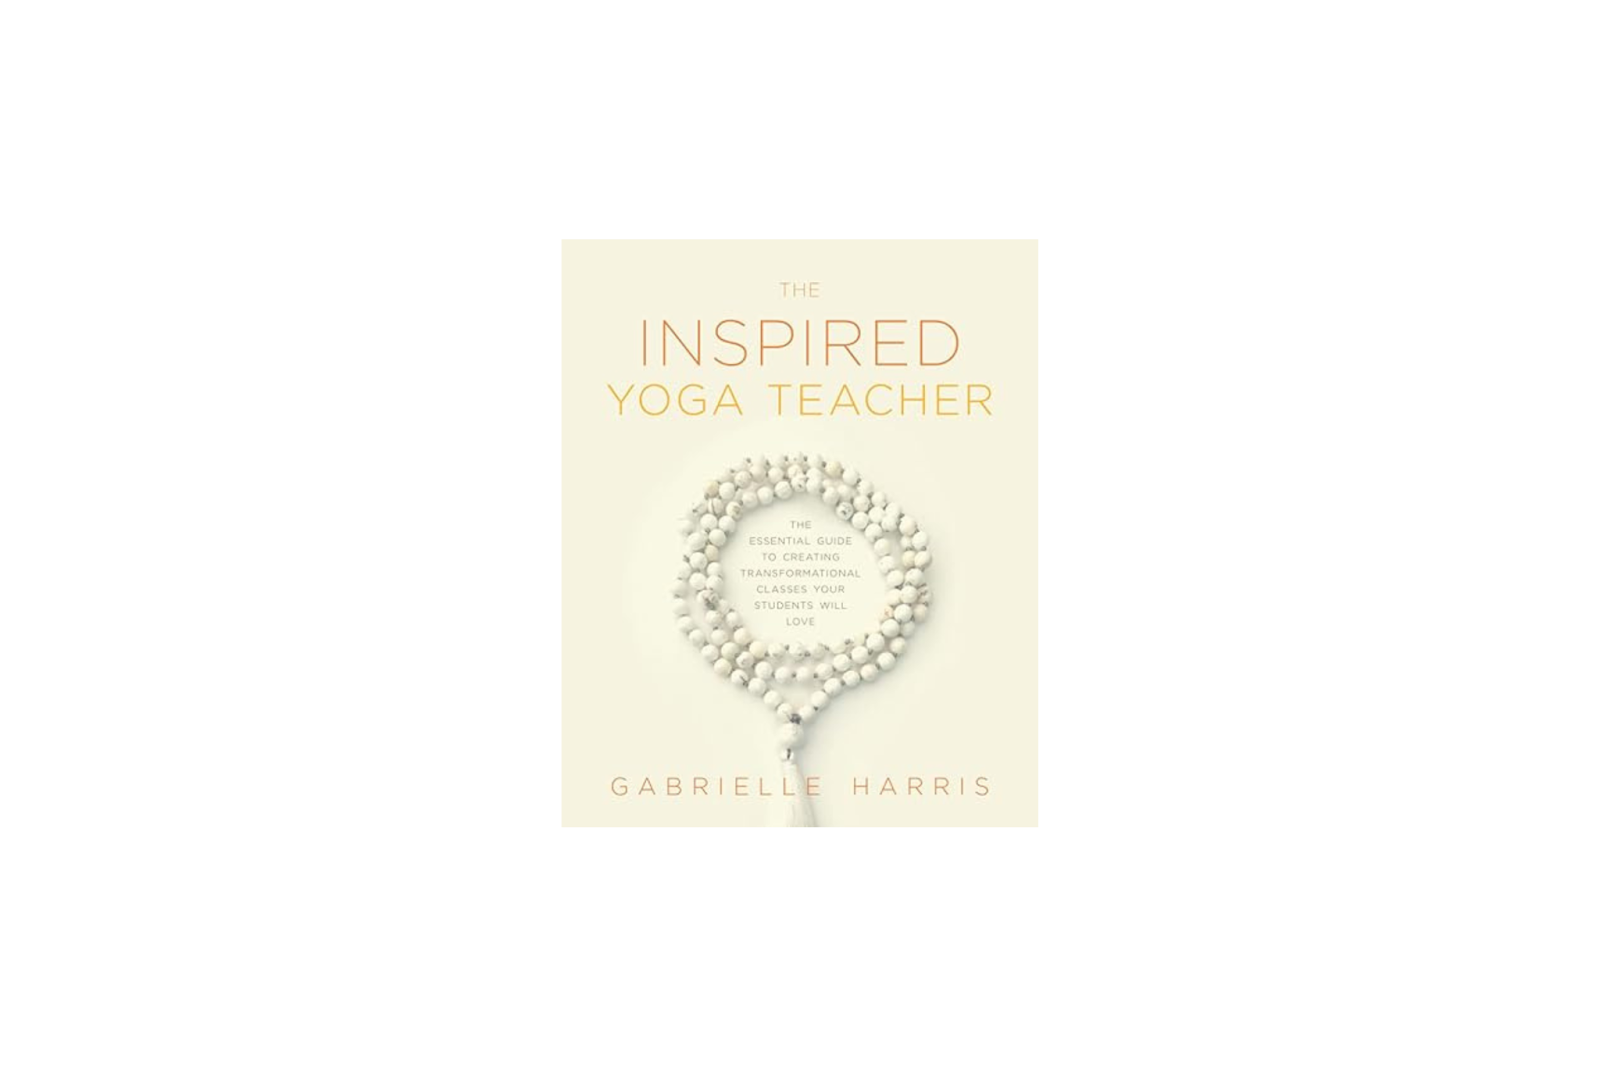 The Inspired Yoga Teacher by Gabrielle Harris